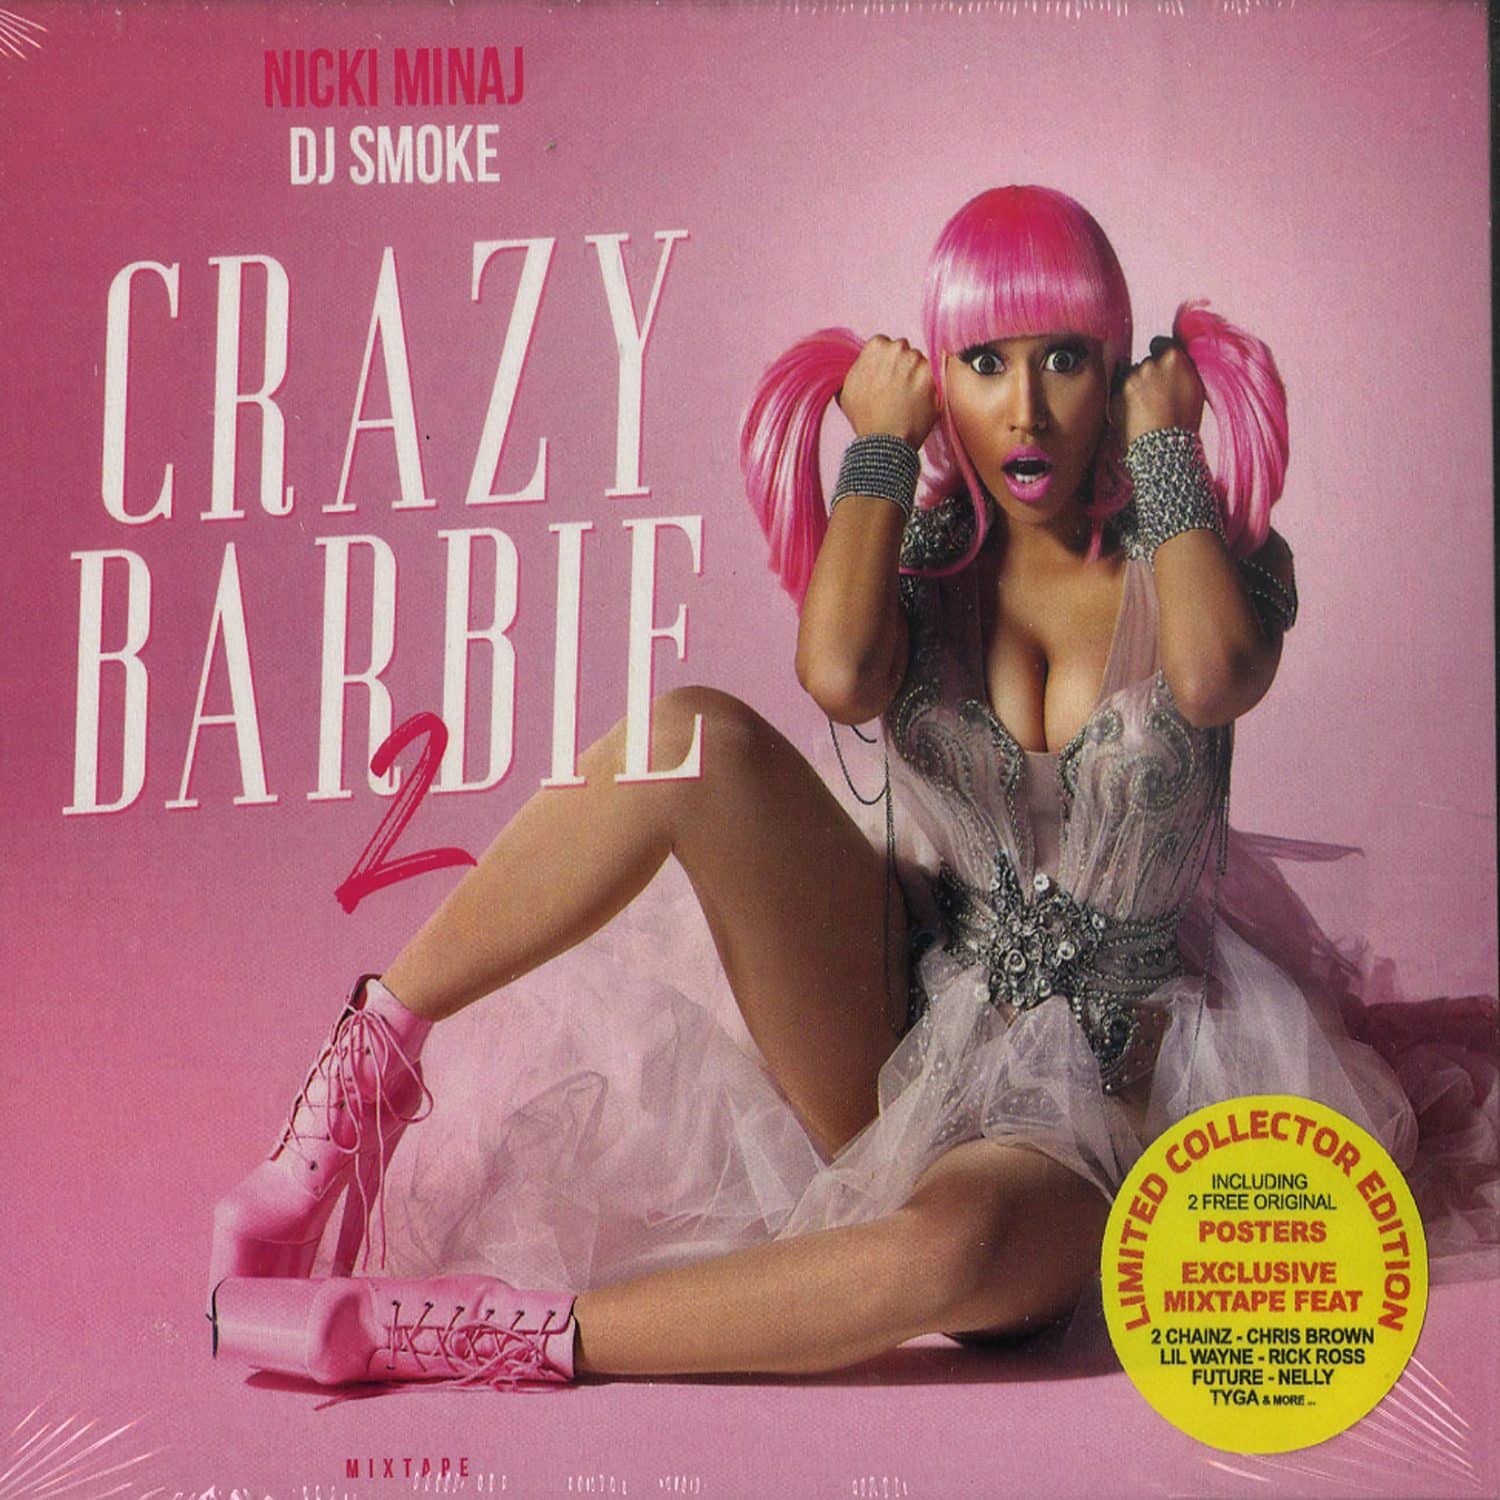 Nicki Minaj / DJ Smoke - CRAZY BARBIE 02 - MIXTAPE 